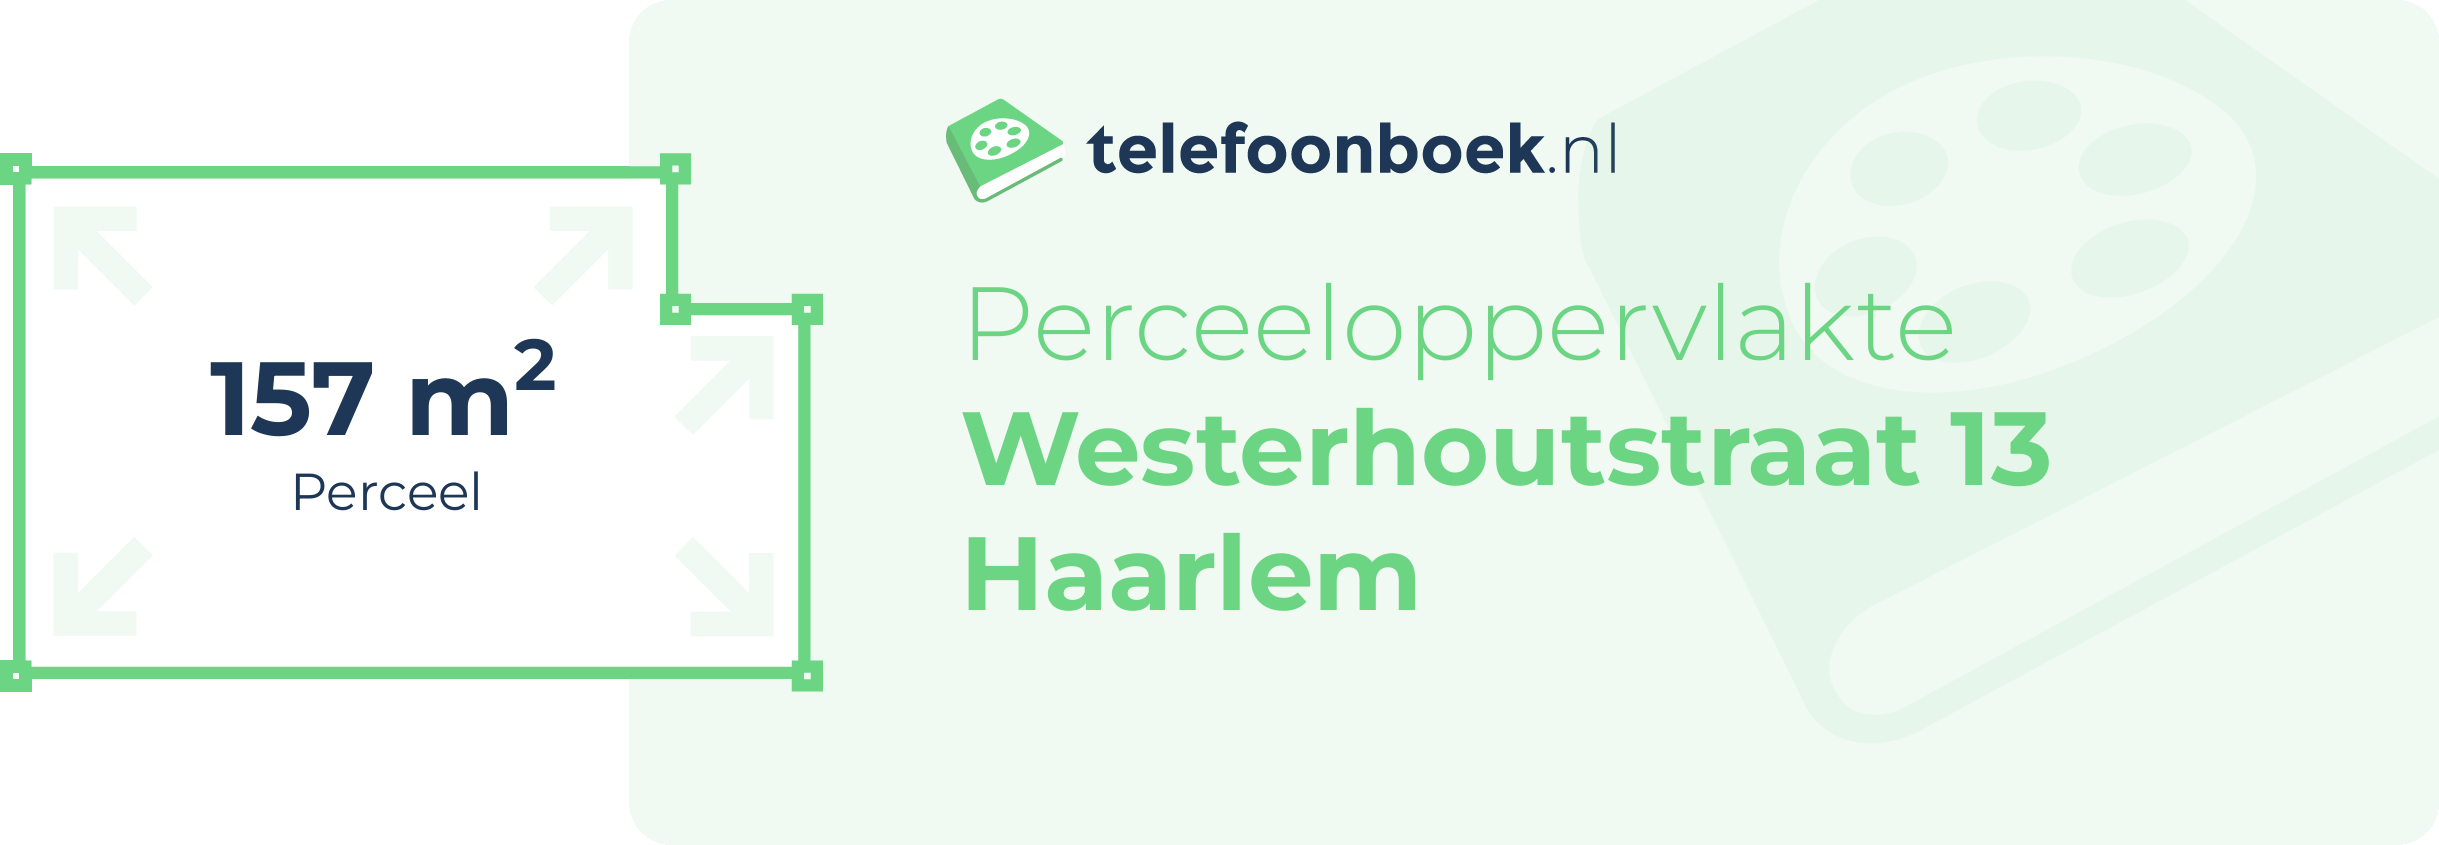 Perceeloppervlakte Westerhoutstraat 13 Haarlem